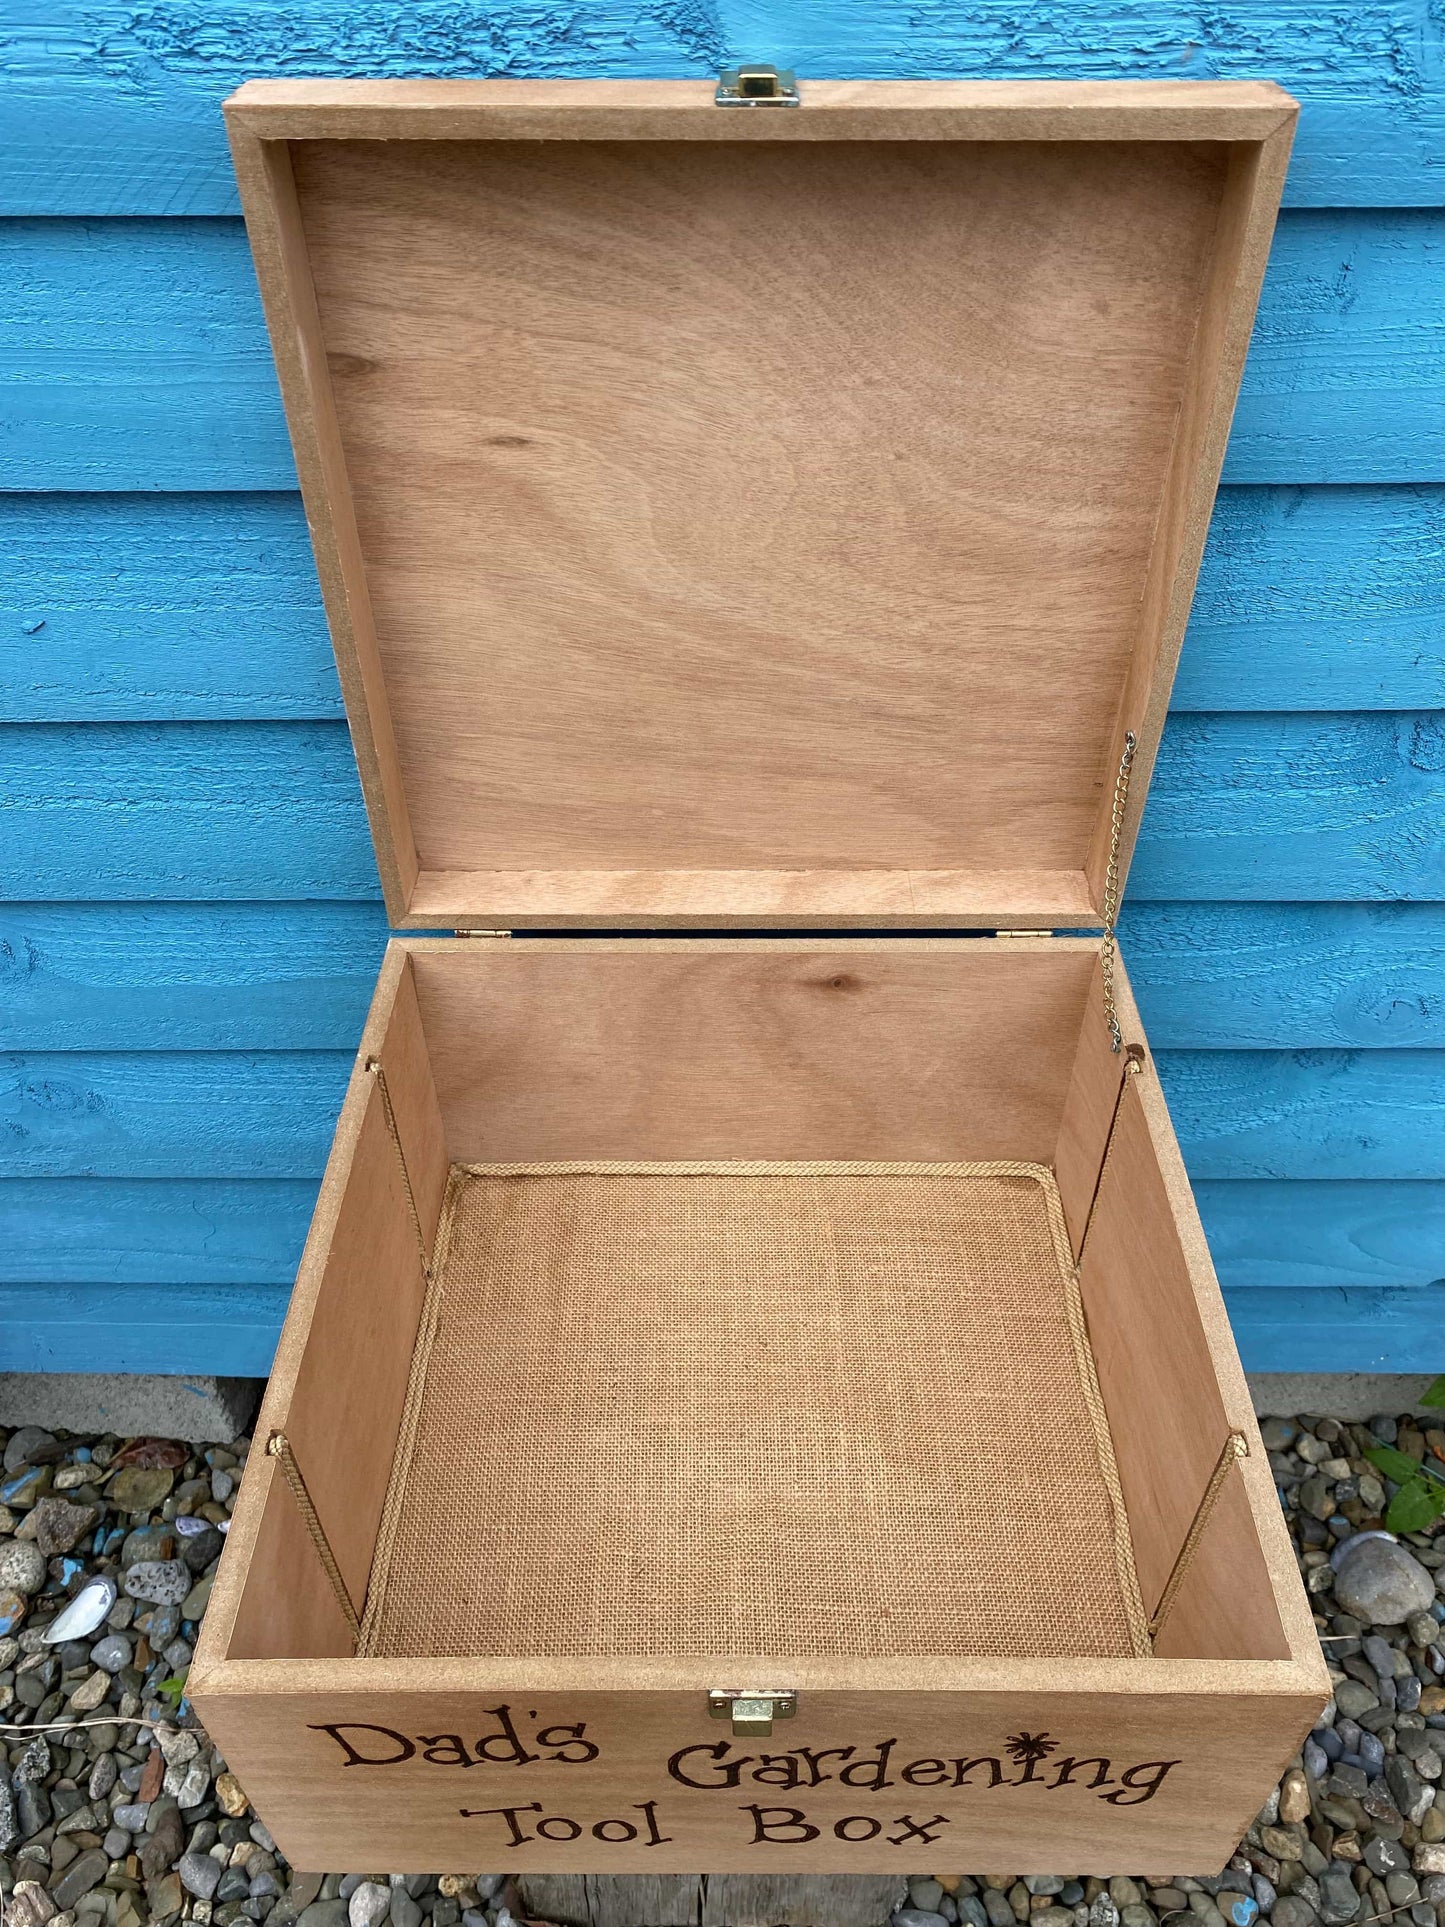 Shell's Driftwood personalised storage box